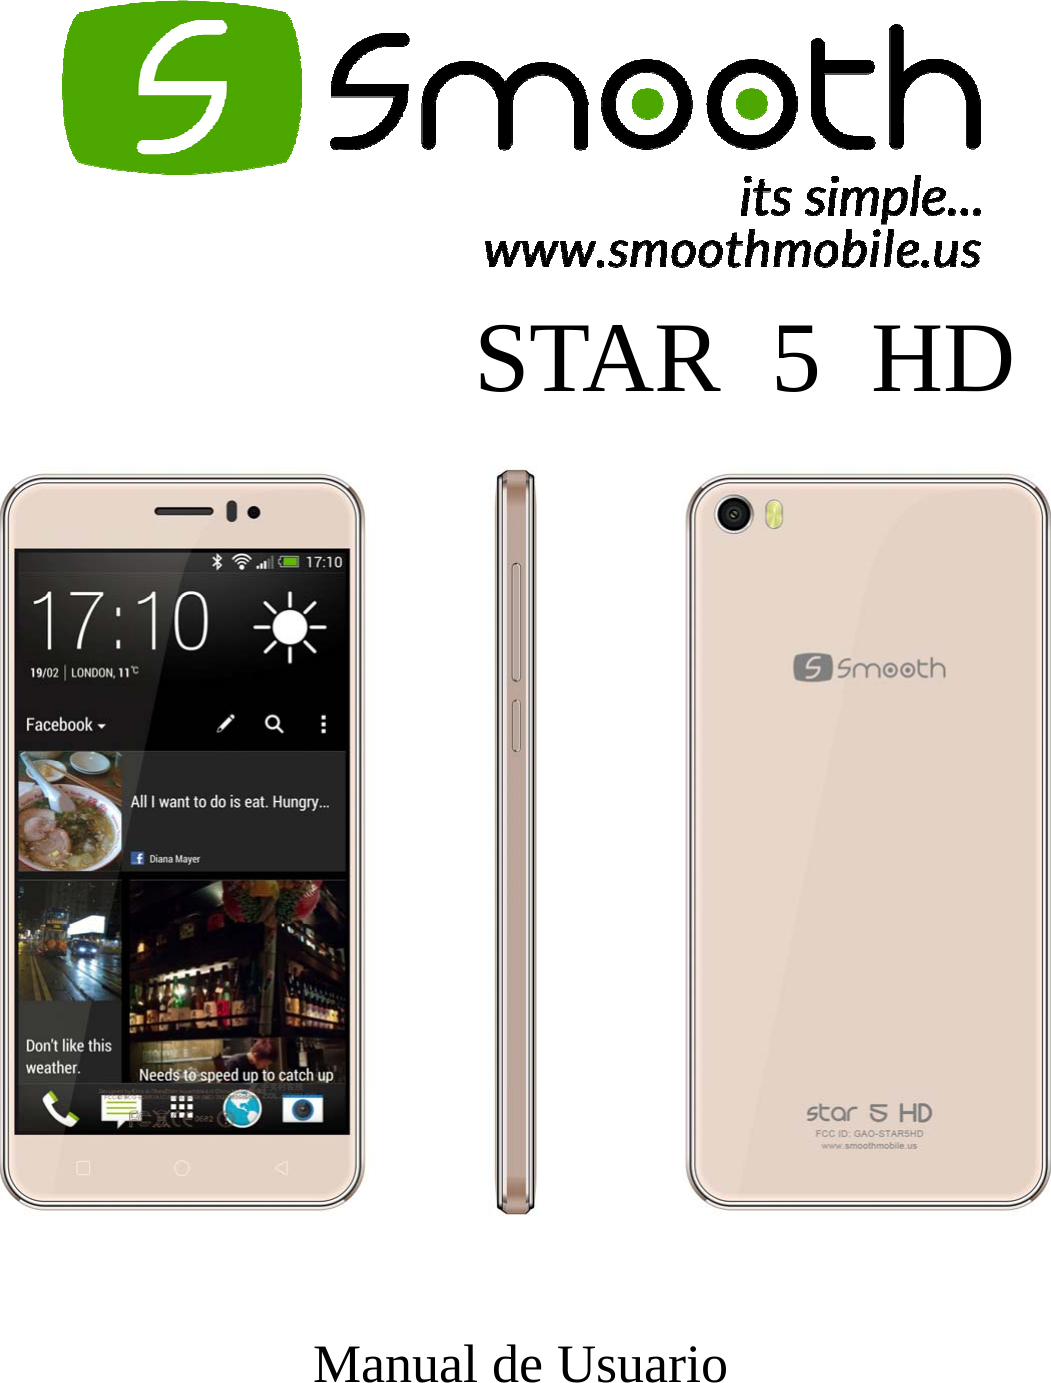  STAR 5 HD   Manual de Usuario 